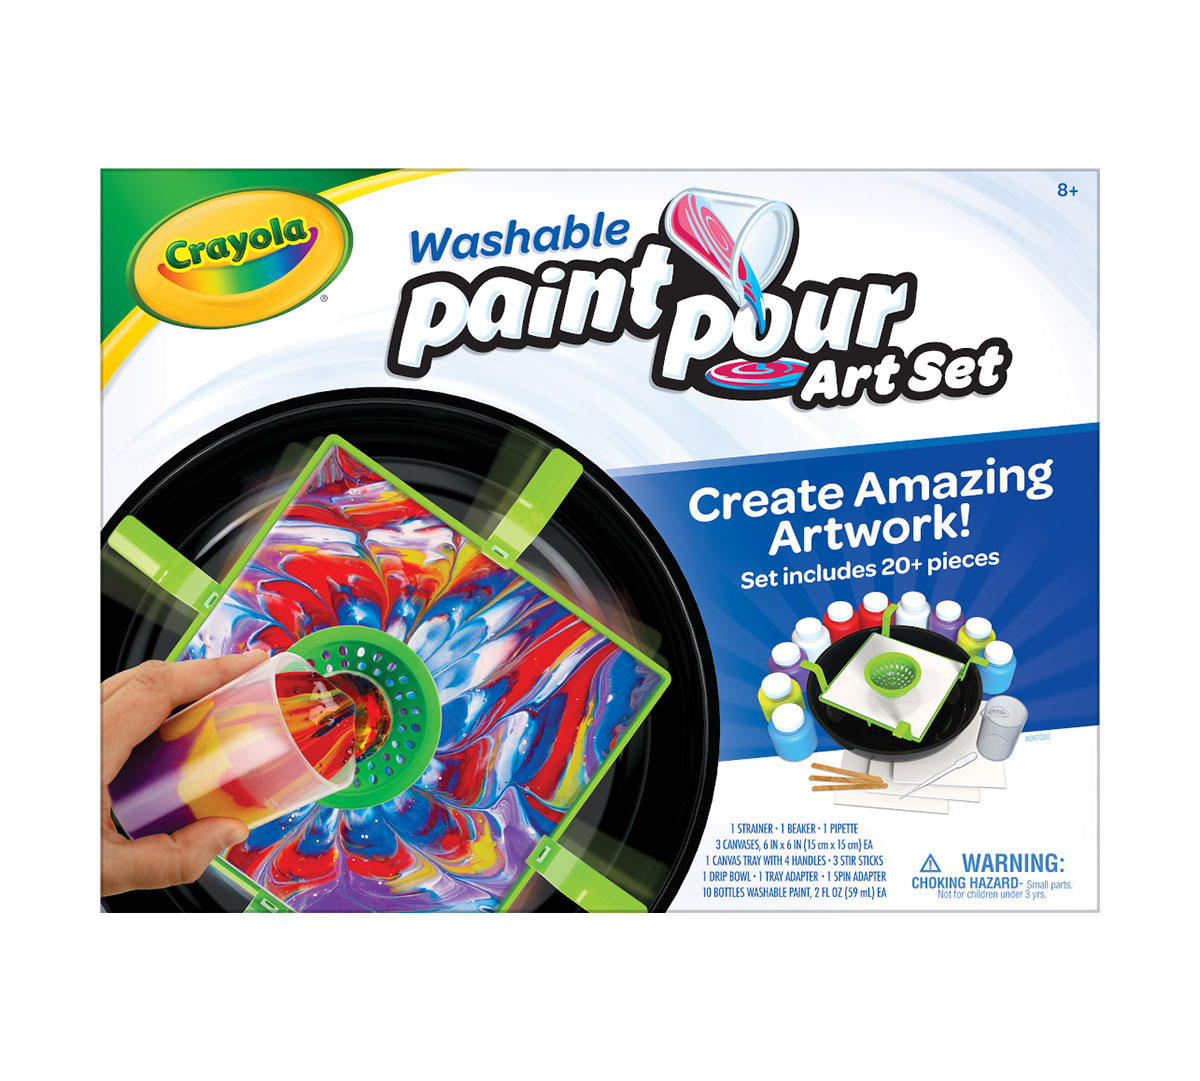 https://shop.crayola.com/on/demandware.static/-/Sites-crayola-storefront/default/dw1ef518fe/images/04-1041-Kits---Washable-Paint-Pour-Art_PDP_MAIN.jpg